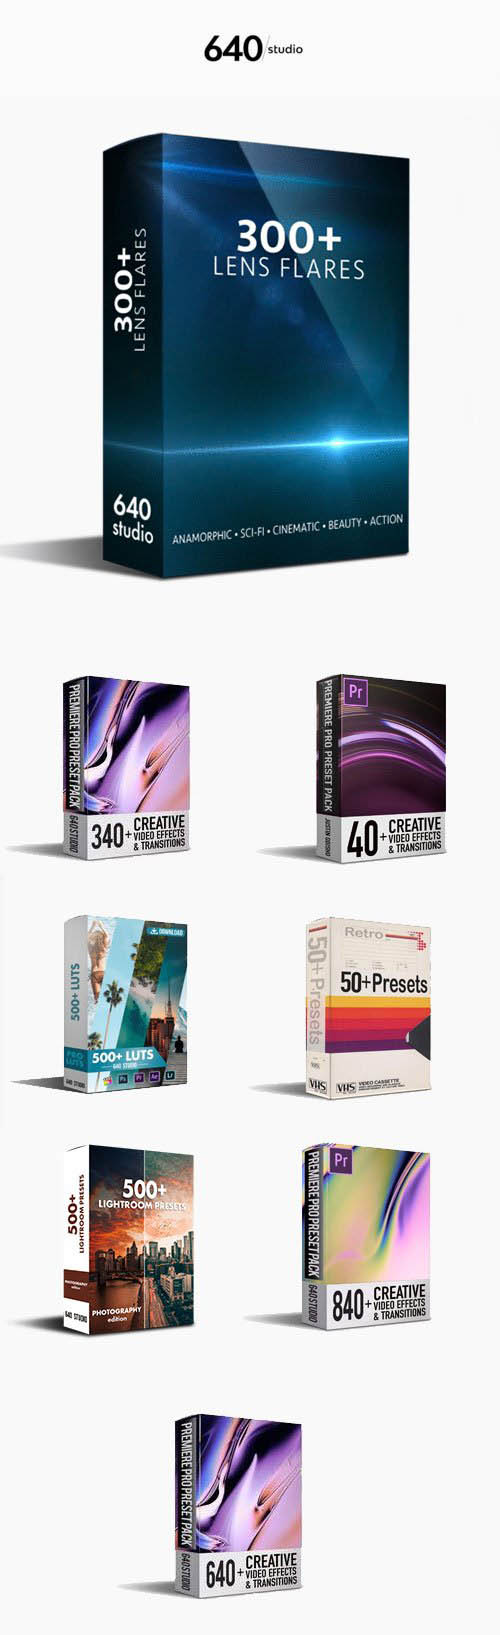 640Studio - All Products Bundle